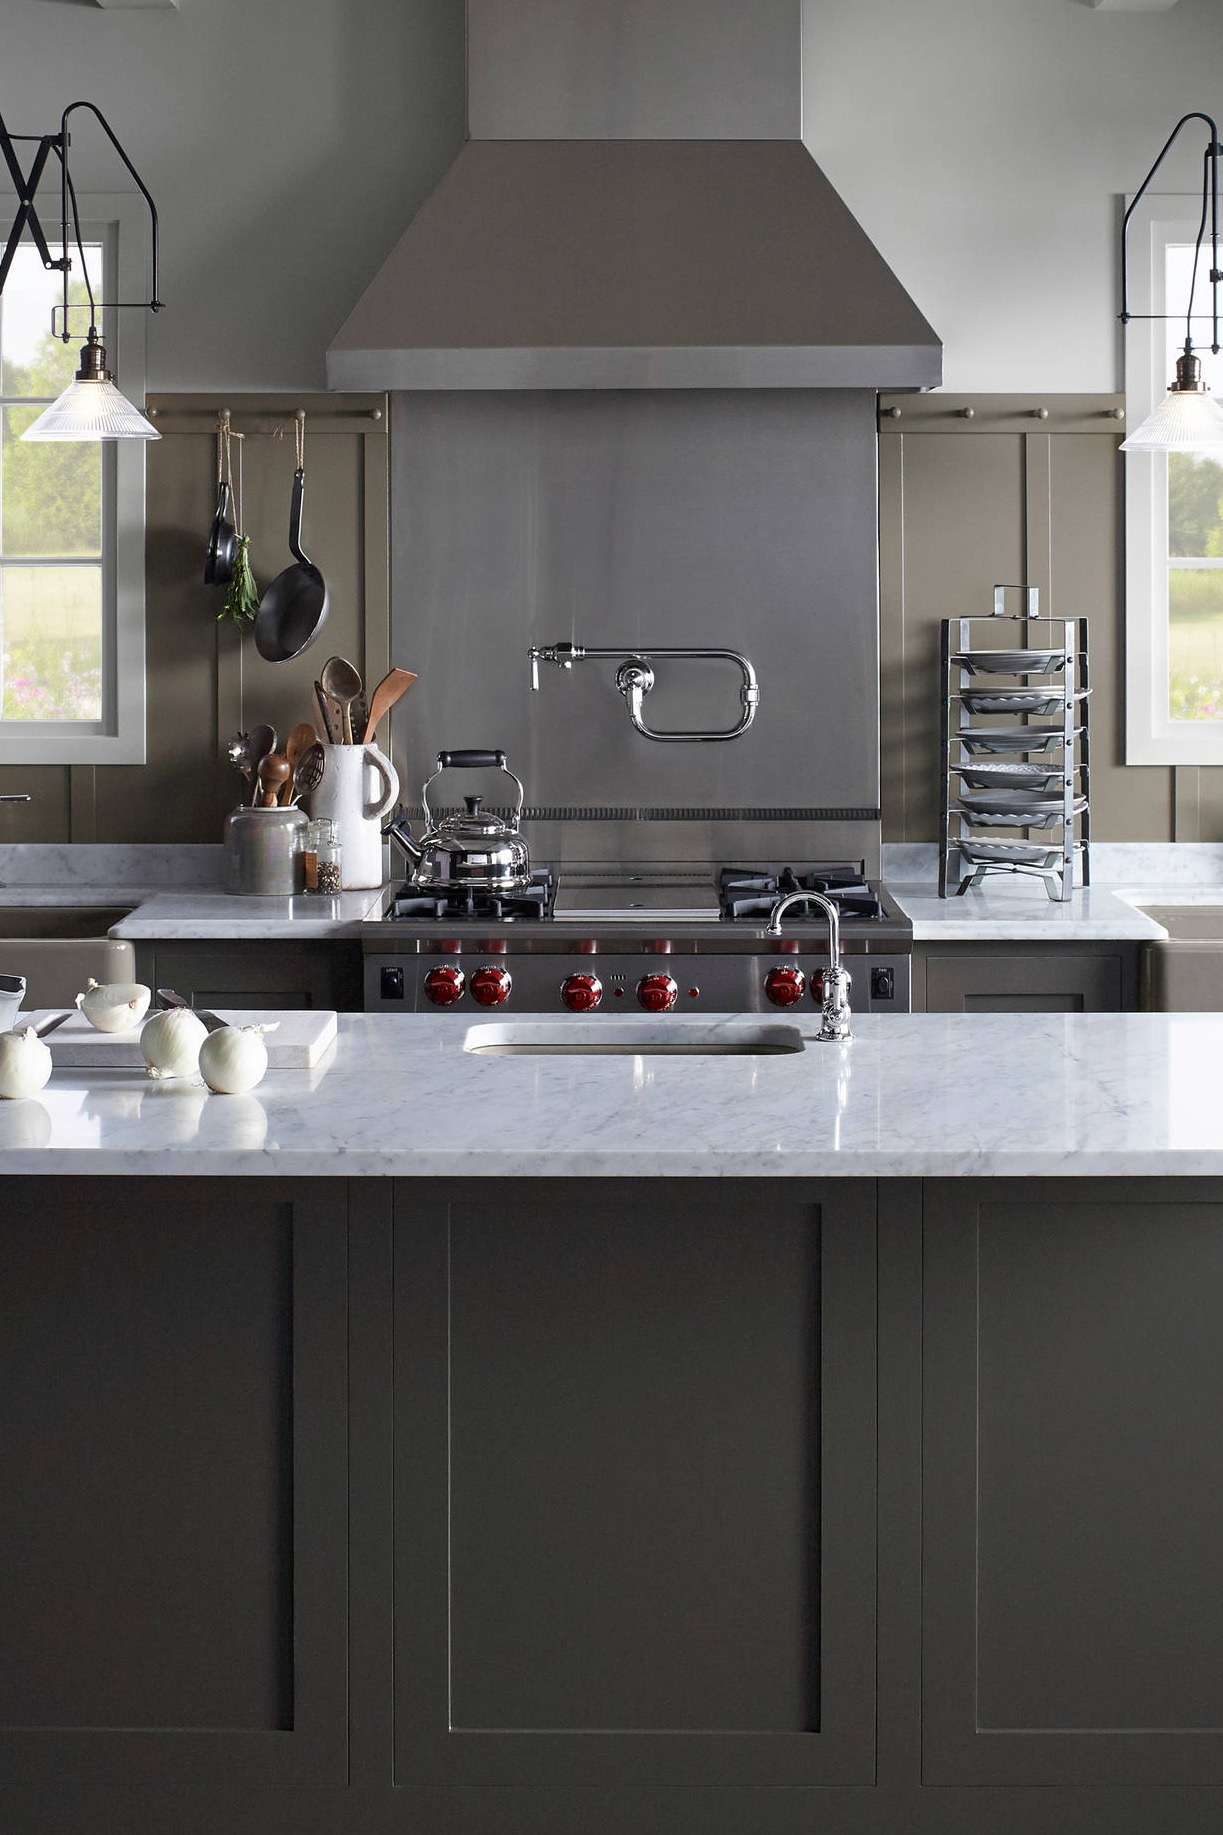 Two Farm House Sink Dark Gray Cabinets White Marble Countertops Hardwood Floor